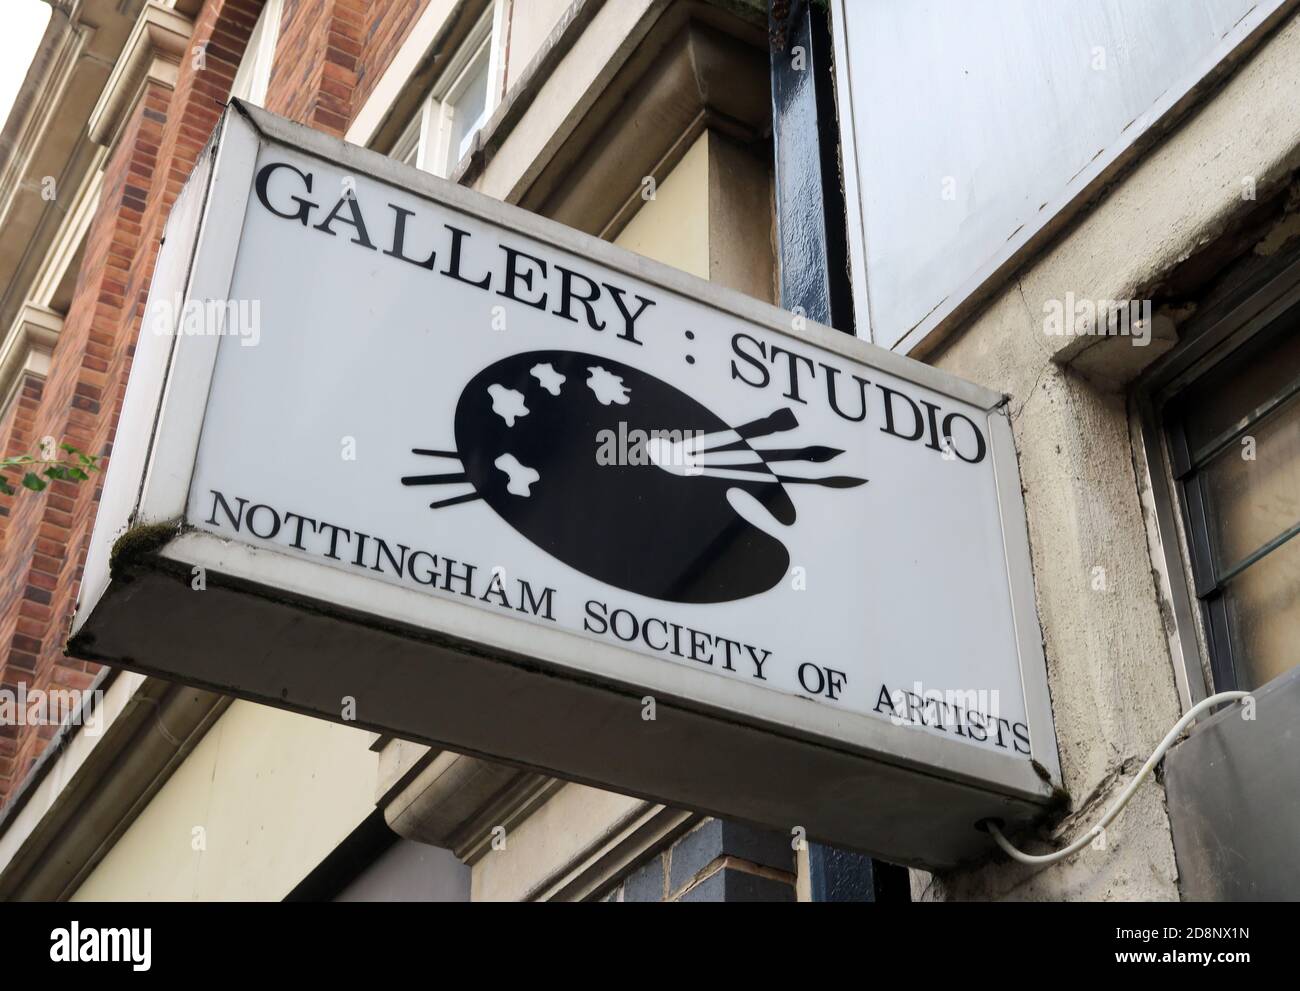 Galerie, Studio, Nottingham Society of Artists, St Luke's House, 71 Friar Lane, Angleterre, Royaume-Uni Banque D'Images